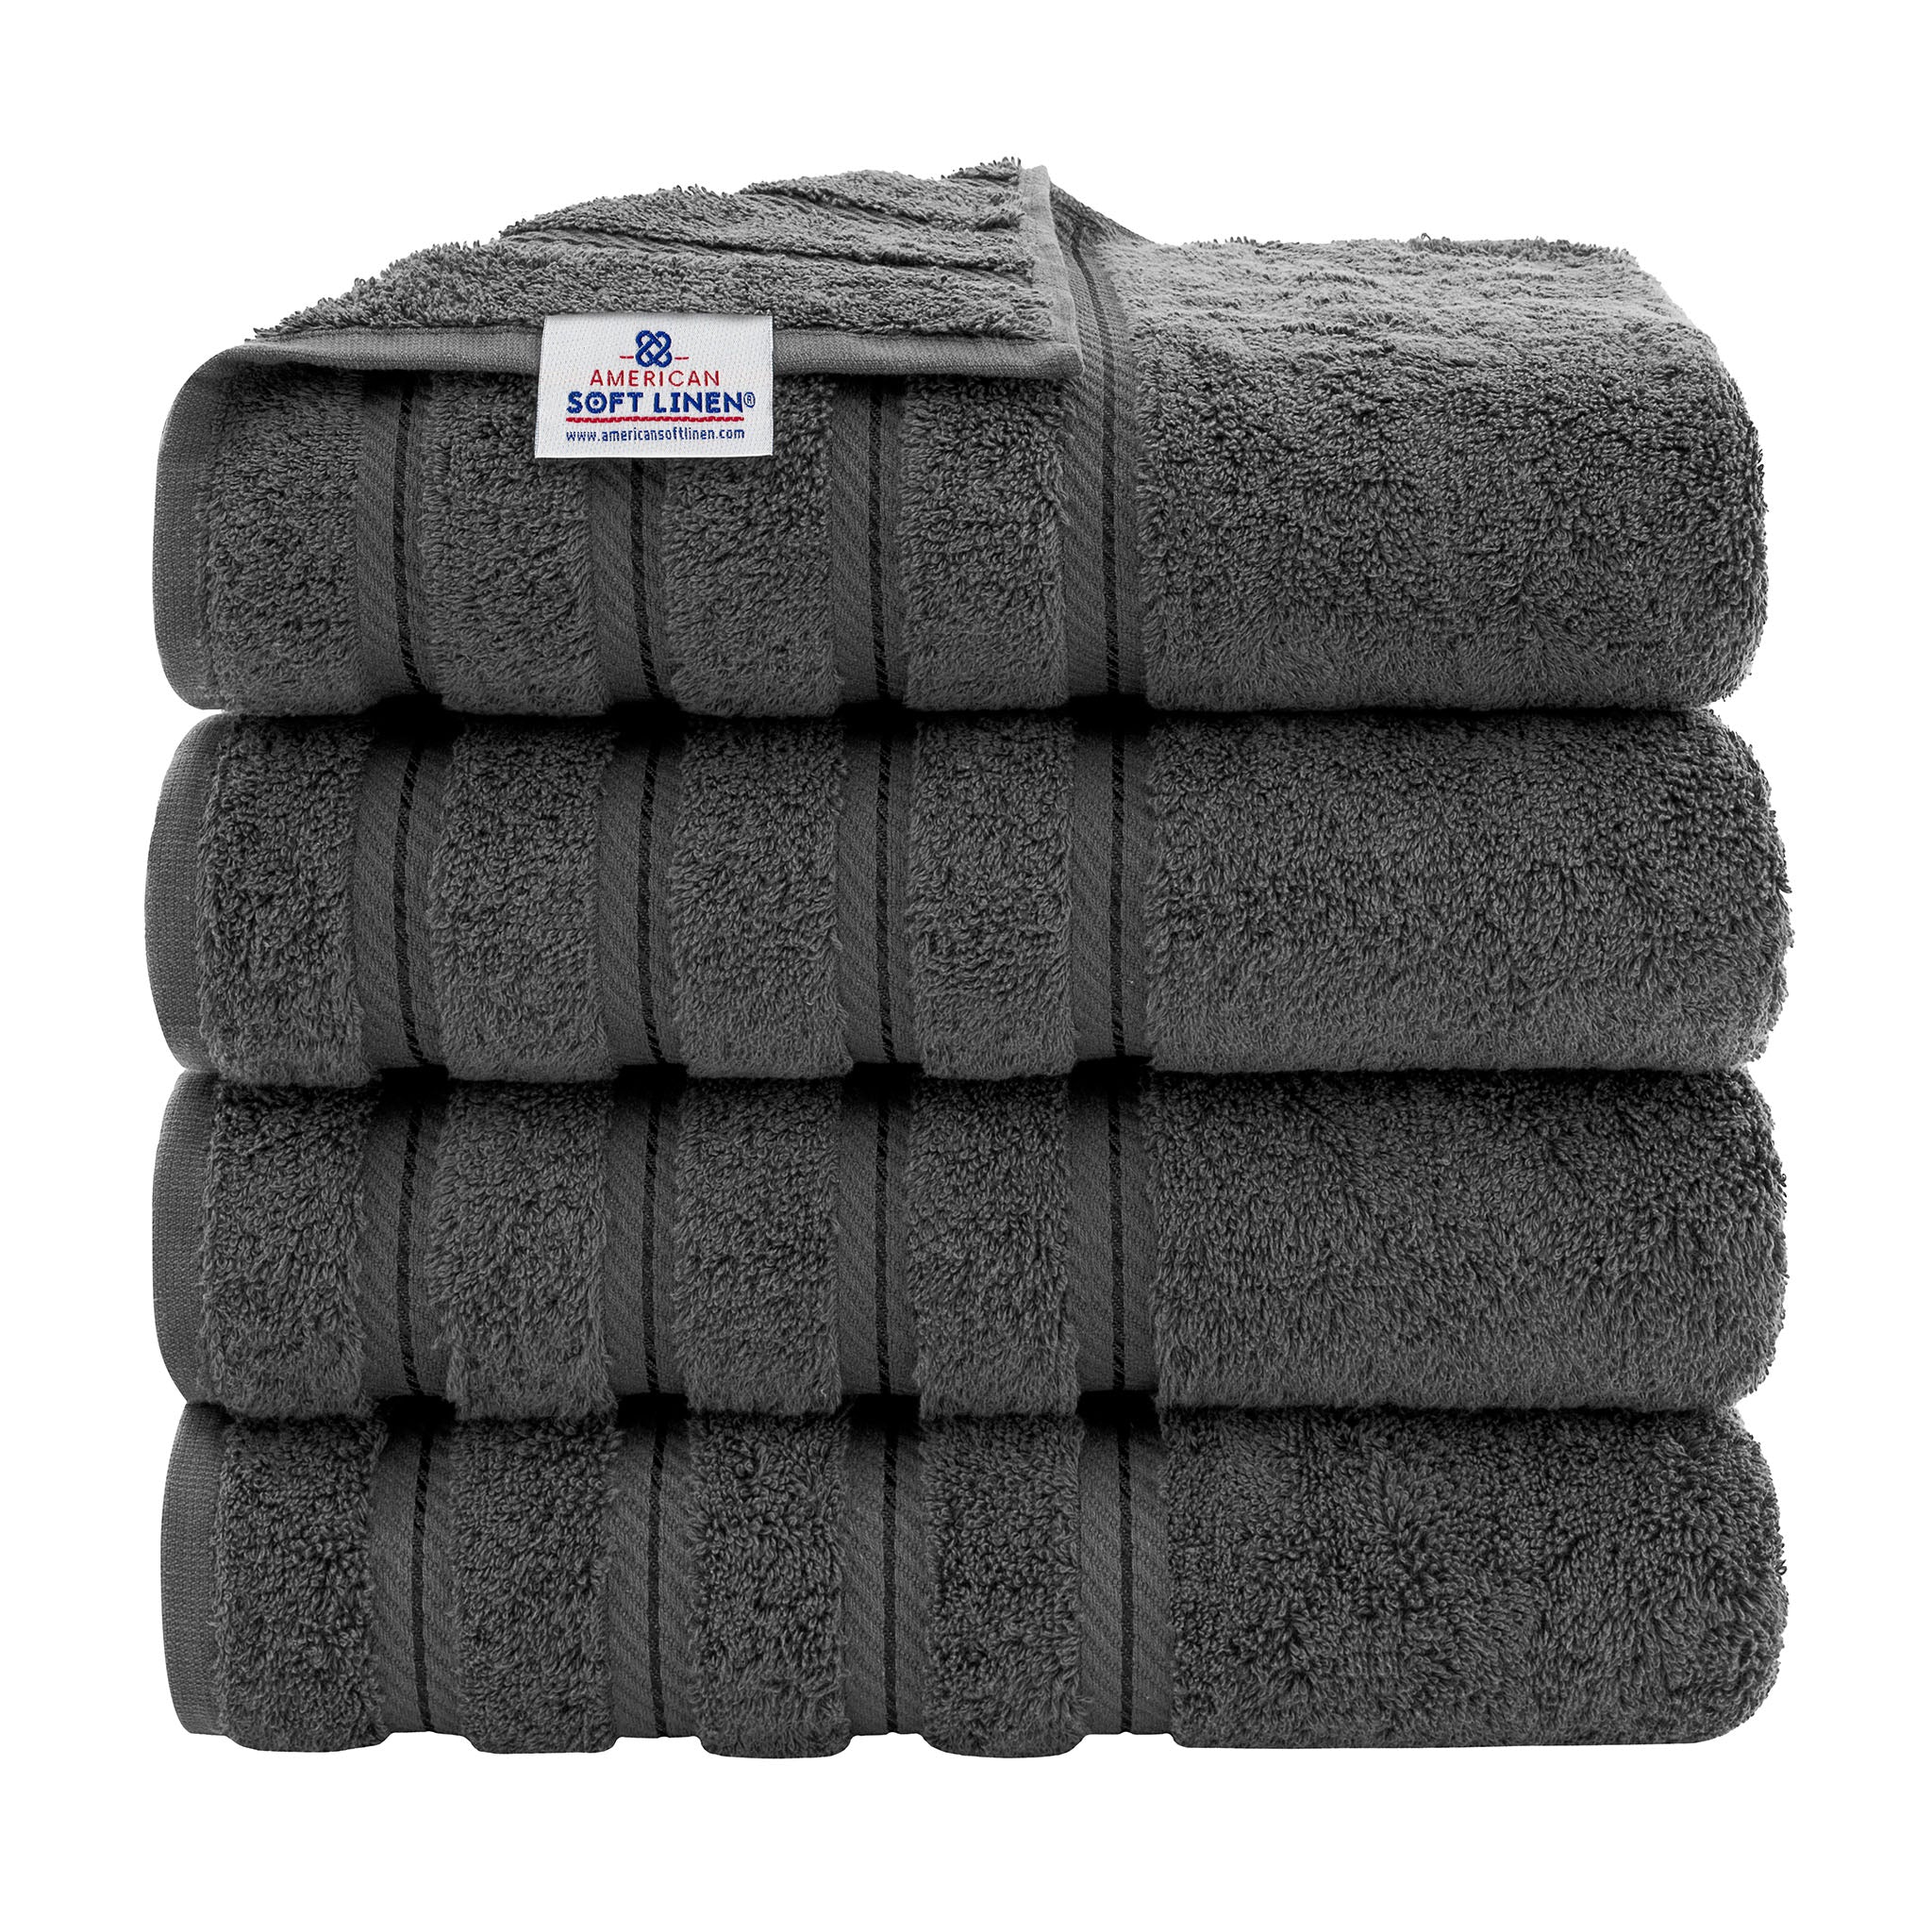 American Soft Linen 100% Turkish Cotton 4 Pack Bath Towel Set gray-1